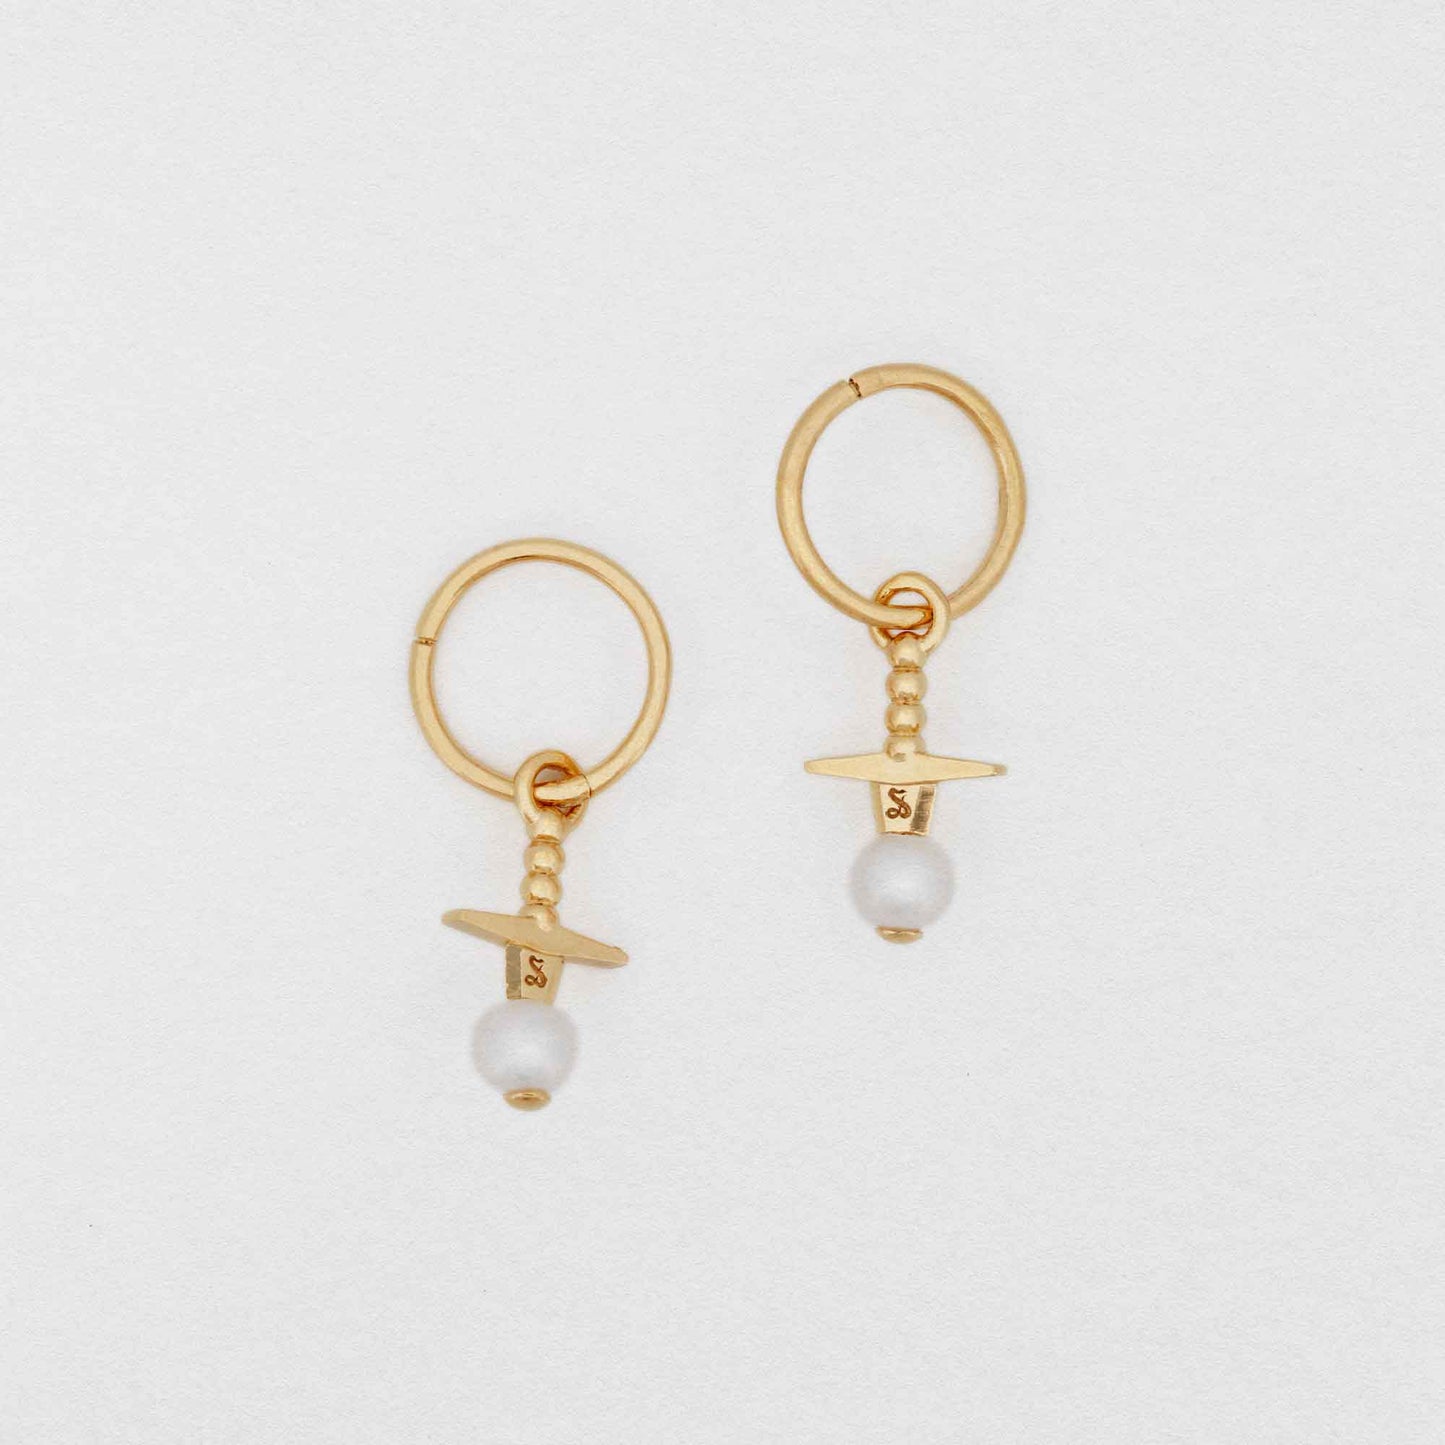 Sue The Boy - Sword + Stone Charm Earrings, 22ct Gold Vermeil